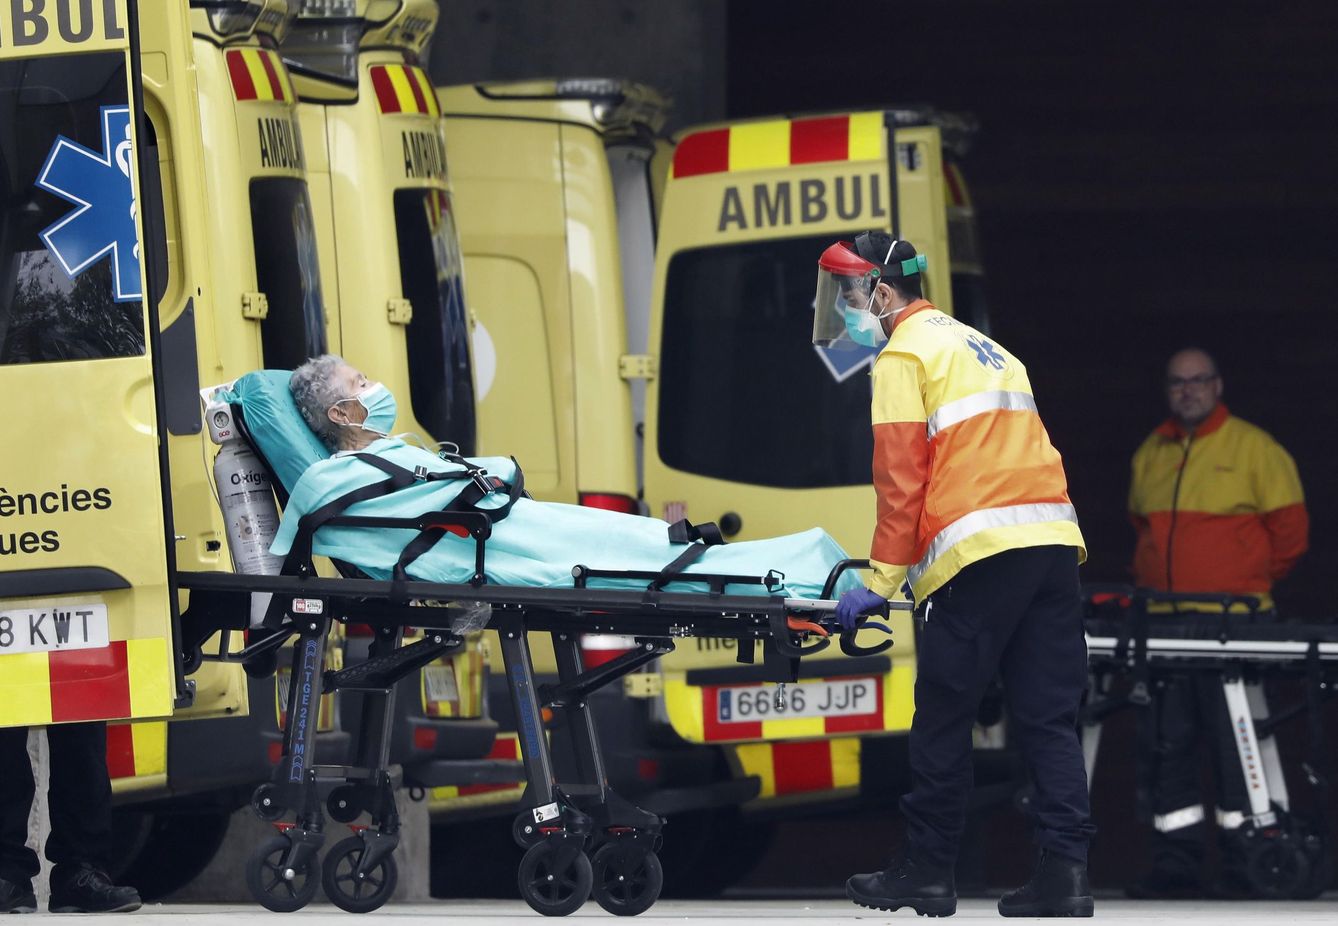 Llegada de un enfermo a la zona de urgencias del Hospital de Bellvitge, en Barcelona. (EFE/Andreu Dalmau)